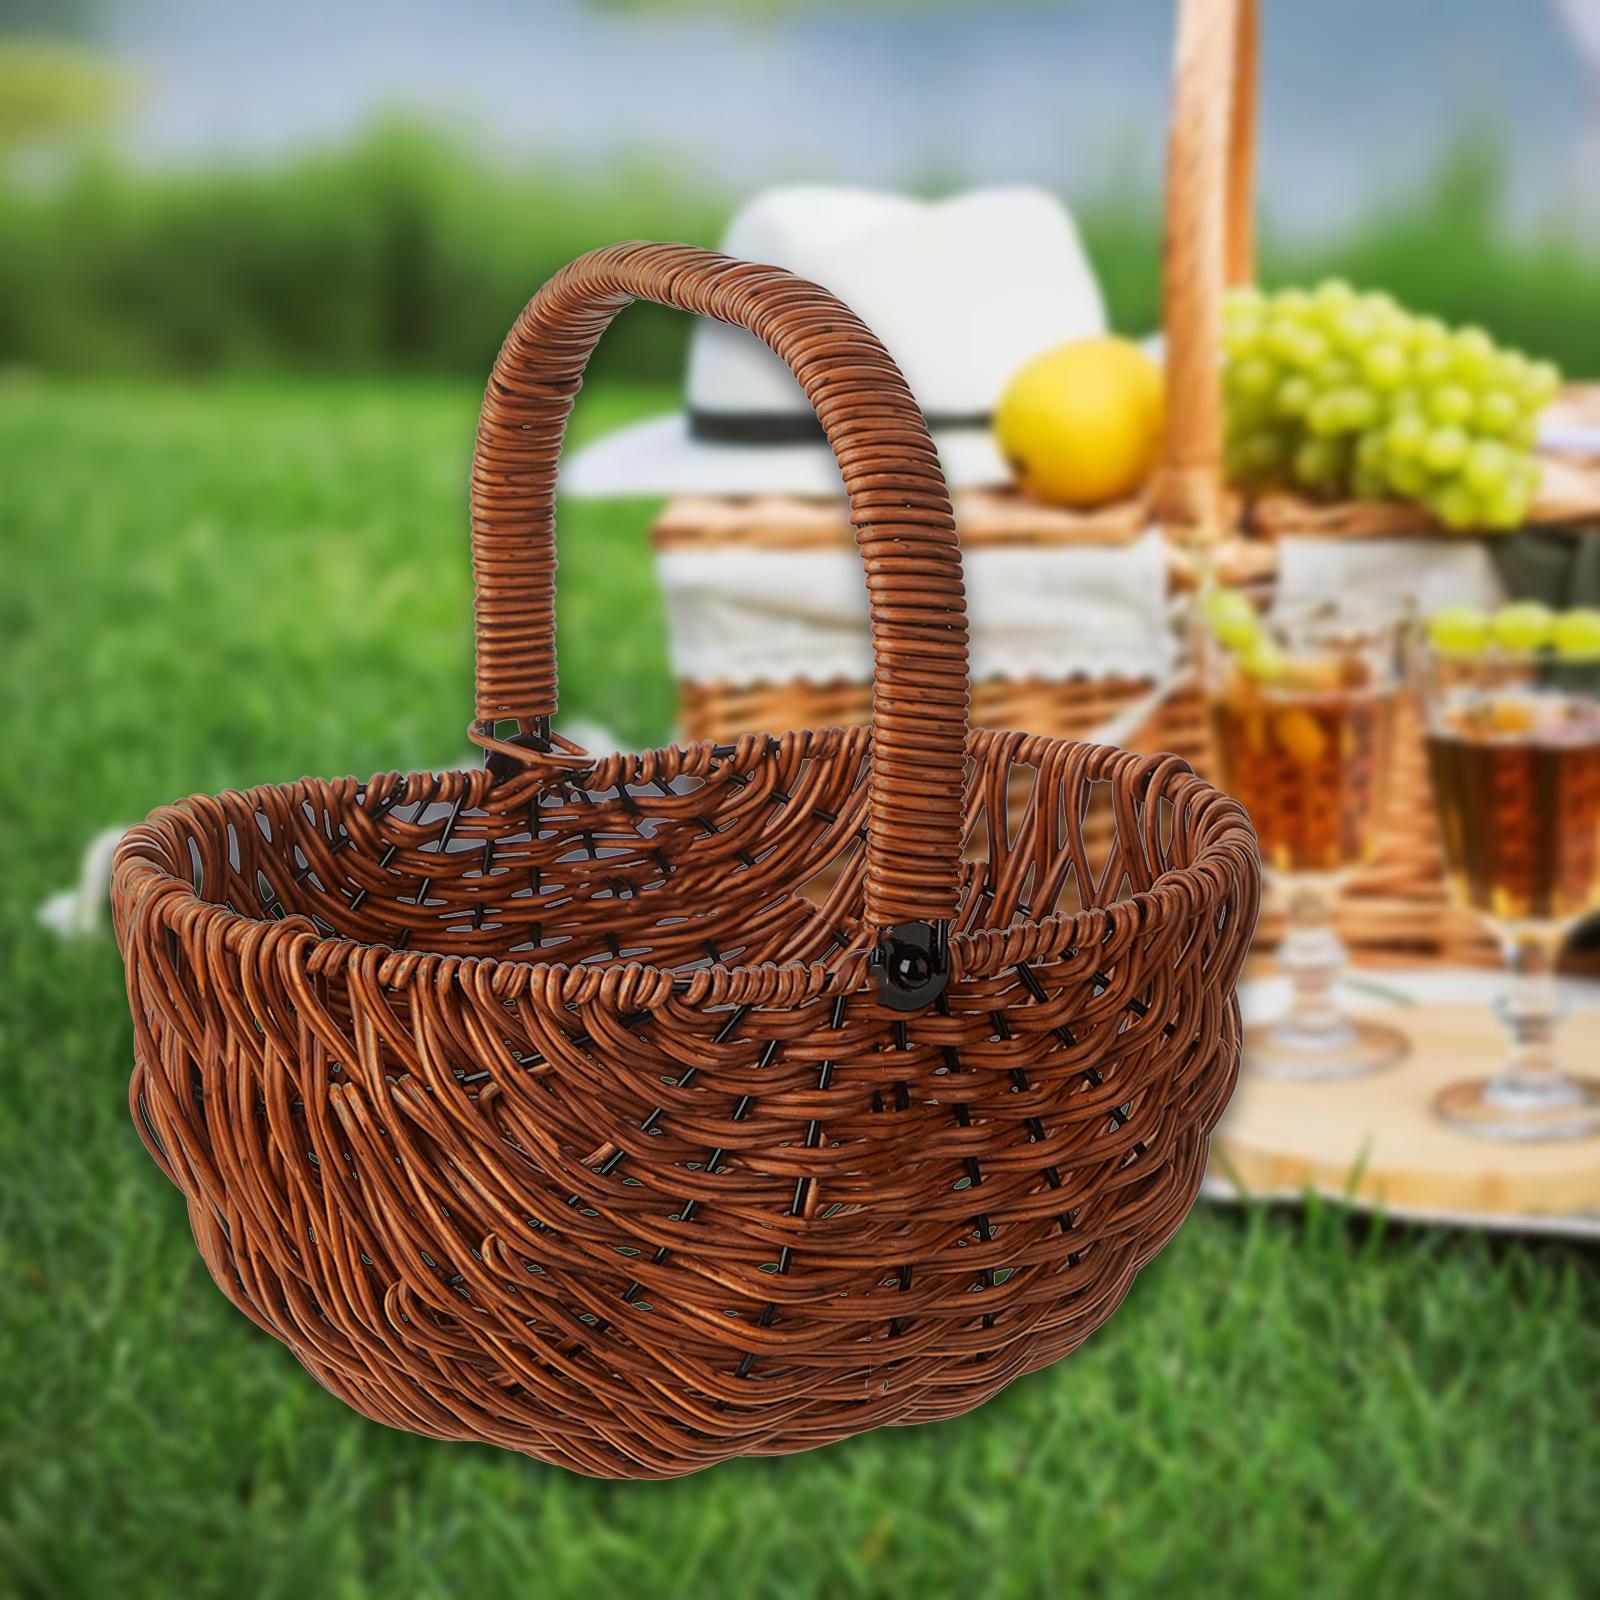 Imitation Rattan Picnic Basket Hand Woven Basket for Wedding Fruit Gathering Dark Brown